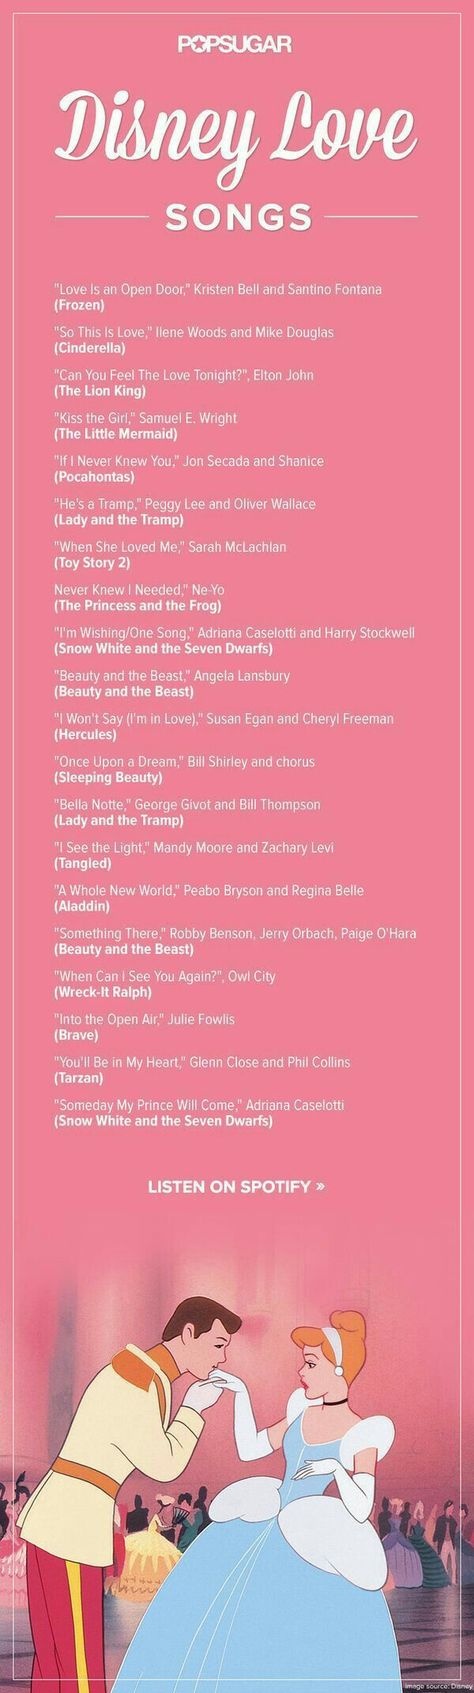 Wedding Songs, Wedding Music, Disney Playlist, Disney Love Songs, Party List, Not Musik, Disney Songs, Song List, Quotes Disney